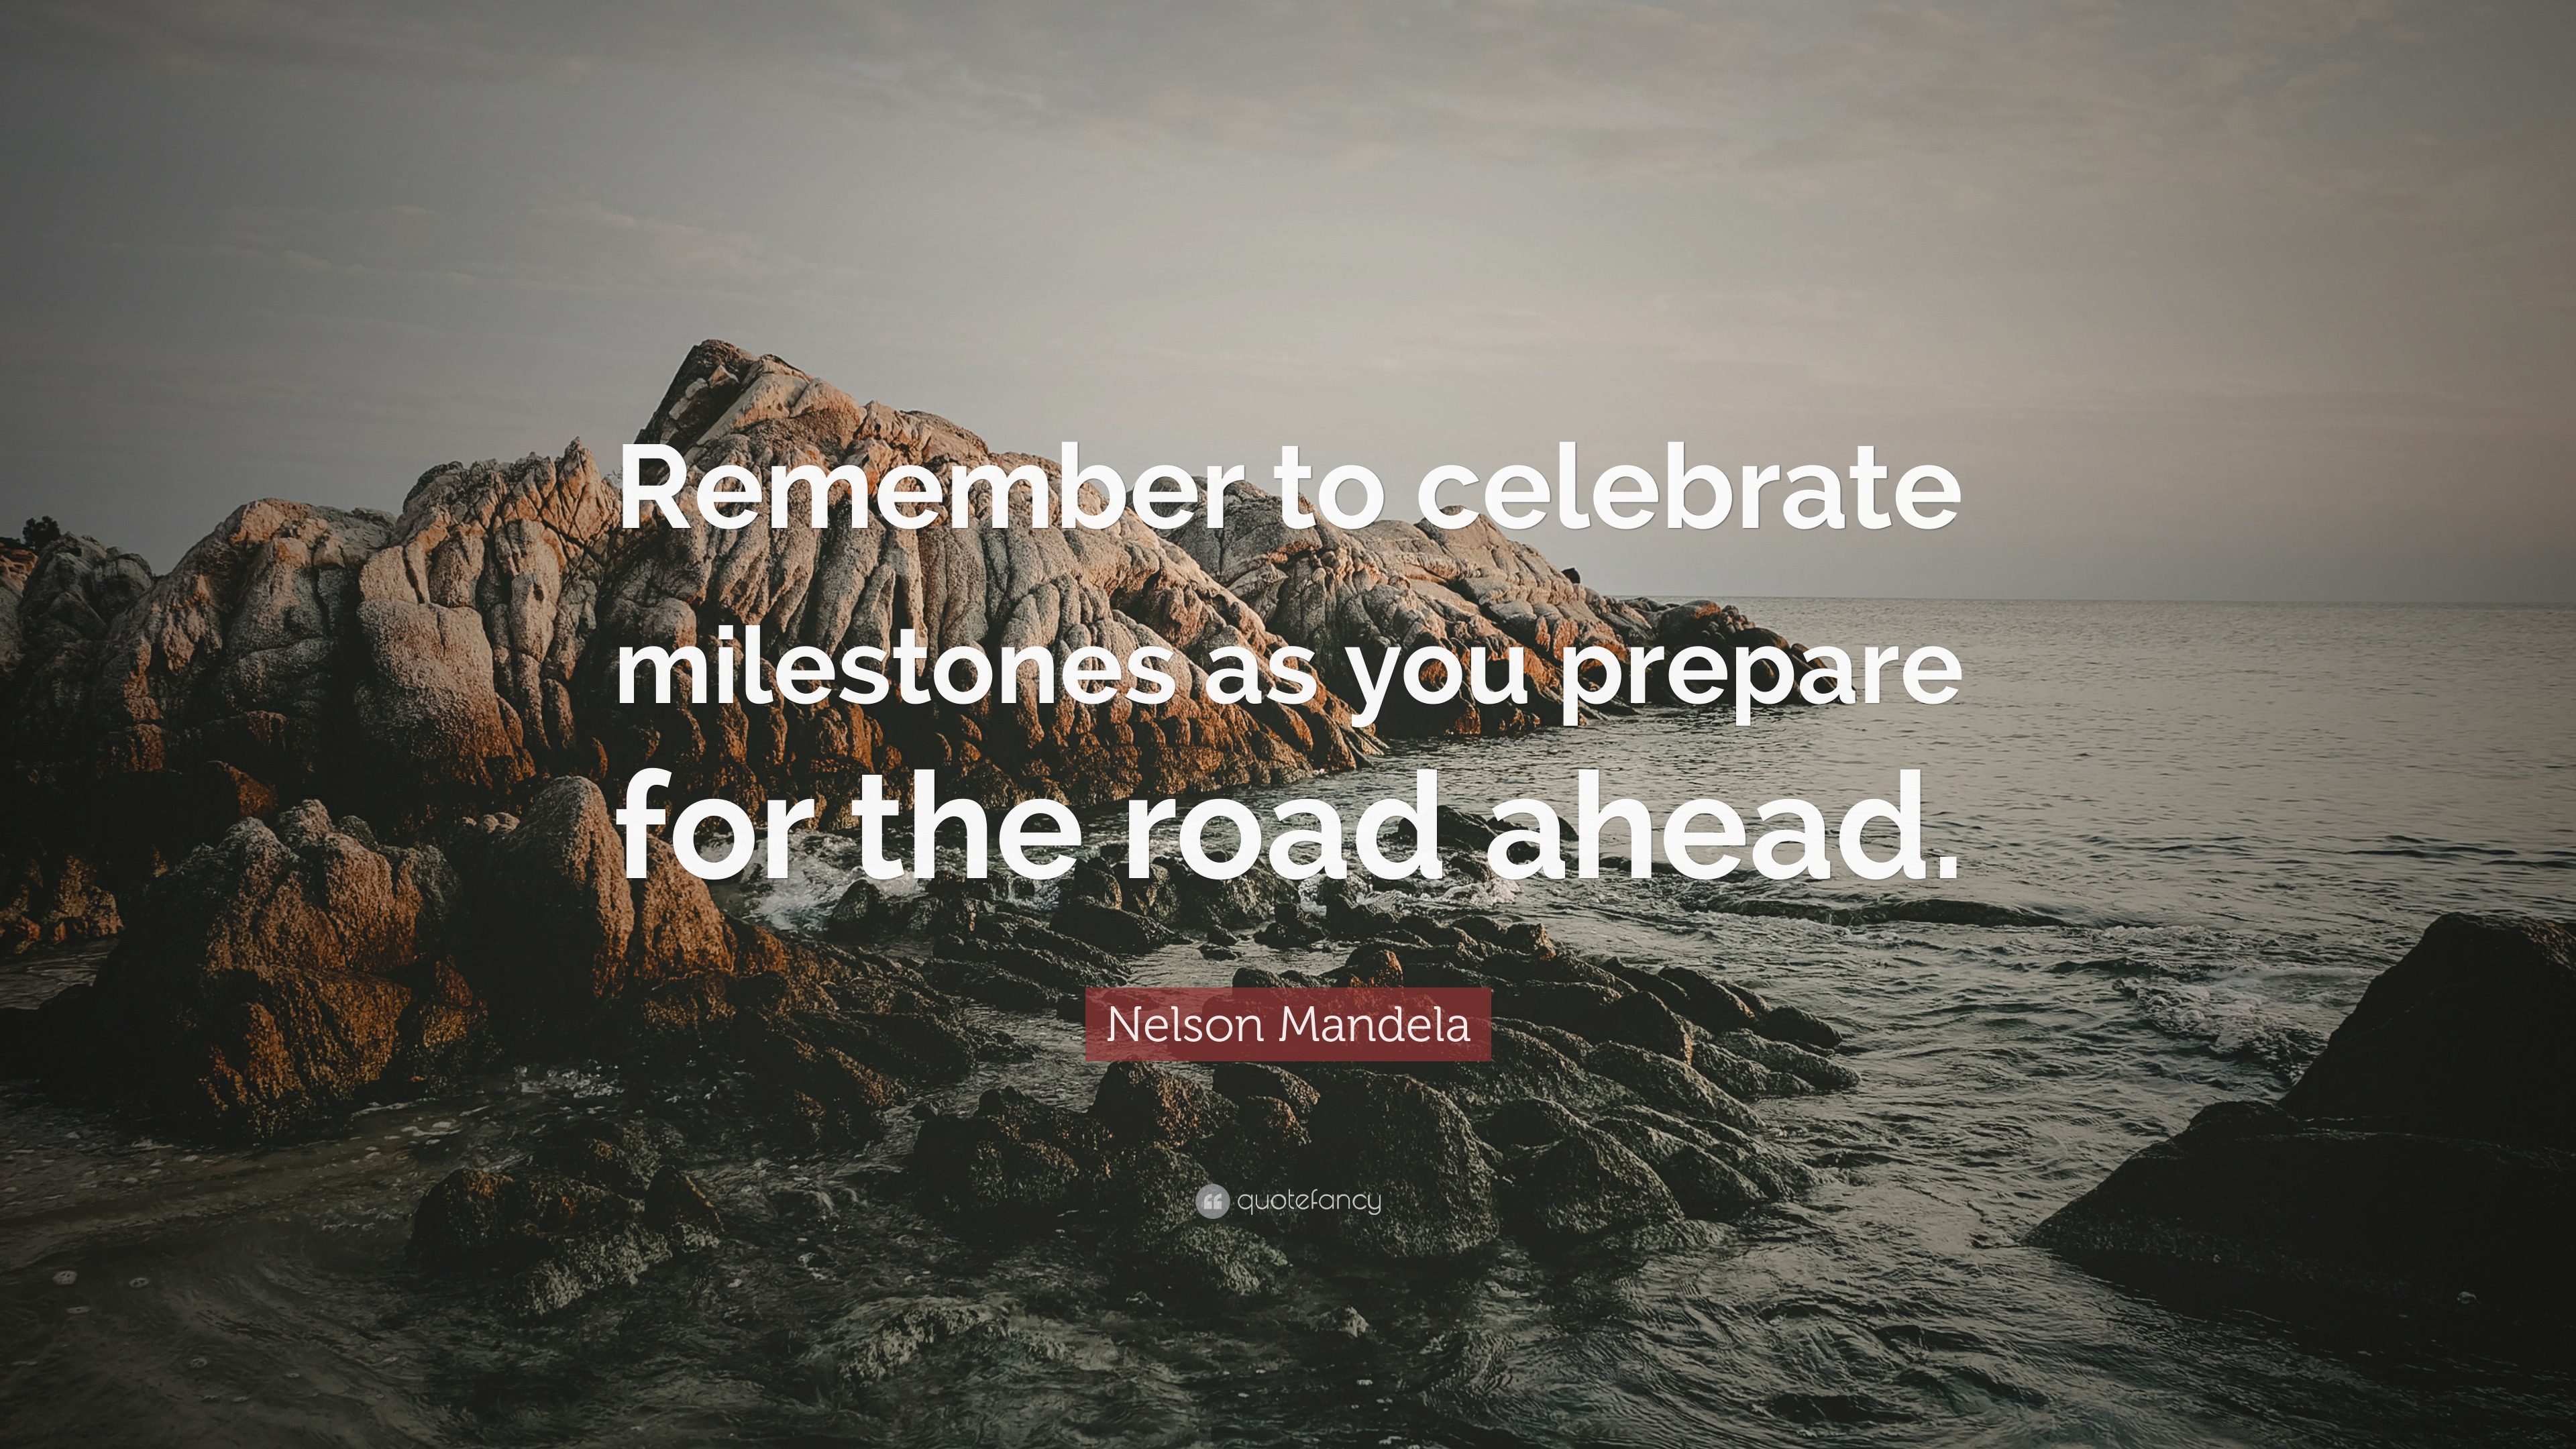 Nelson Mandela Quote: “Remember to celebrate milestones as you prepare ...